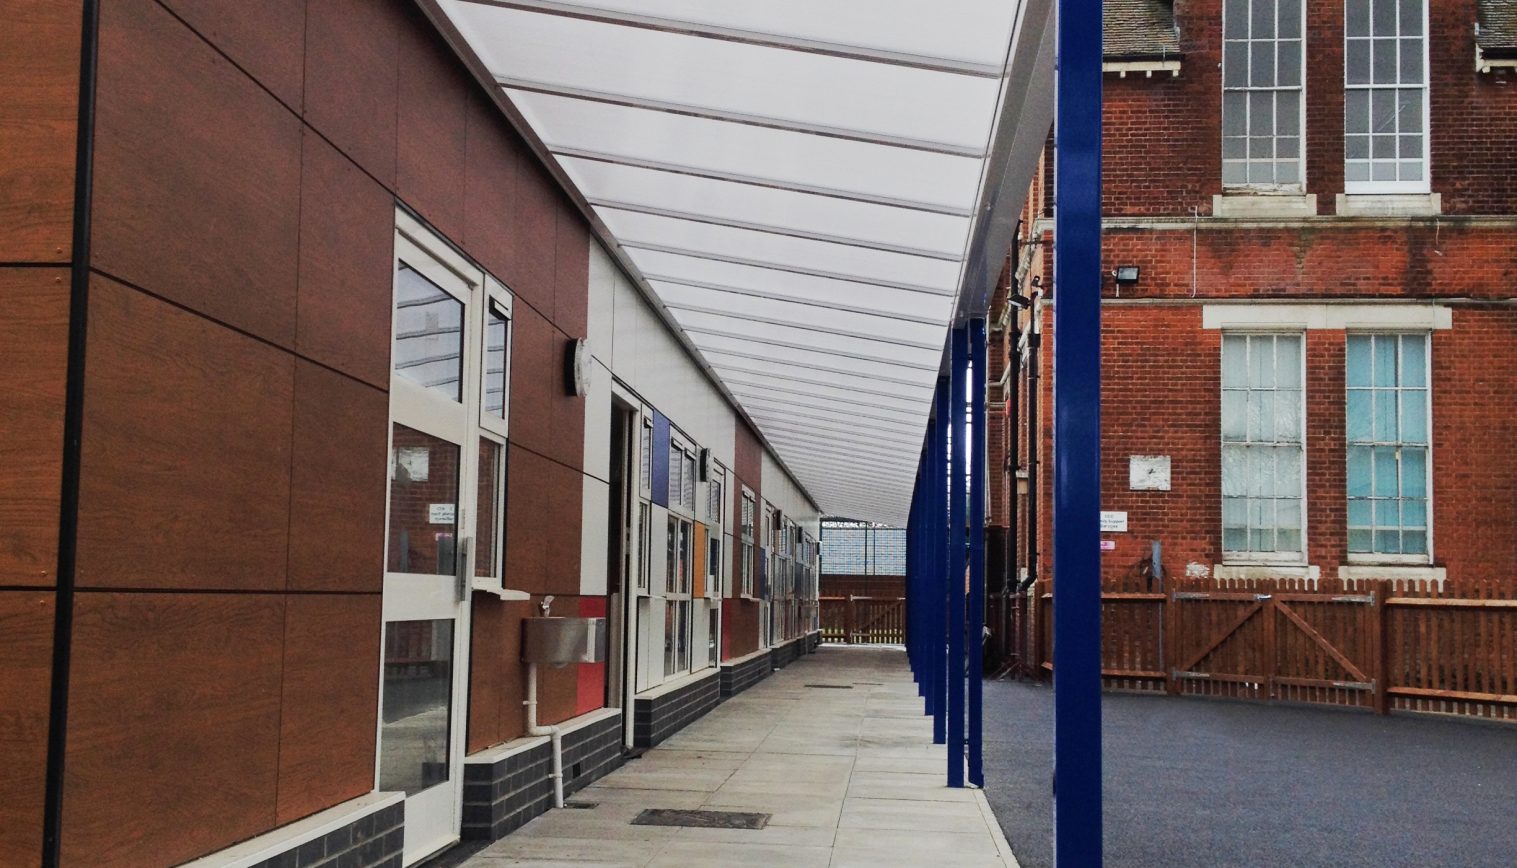 St John’s Primary School – Wall Mounted Walkway Canopy